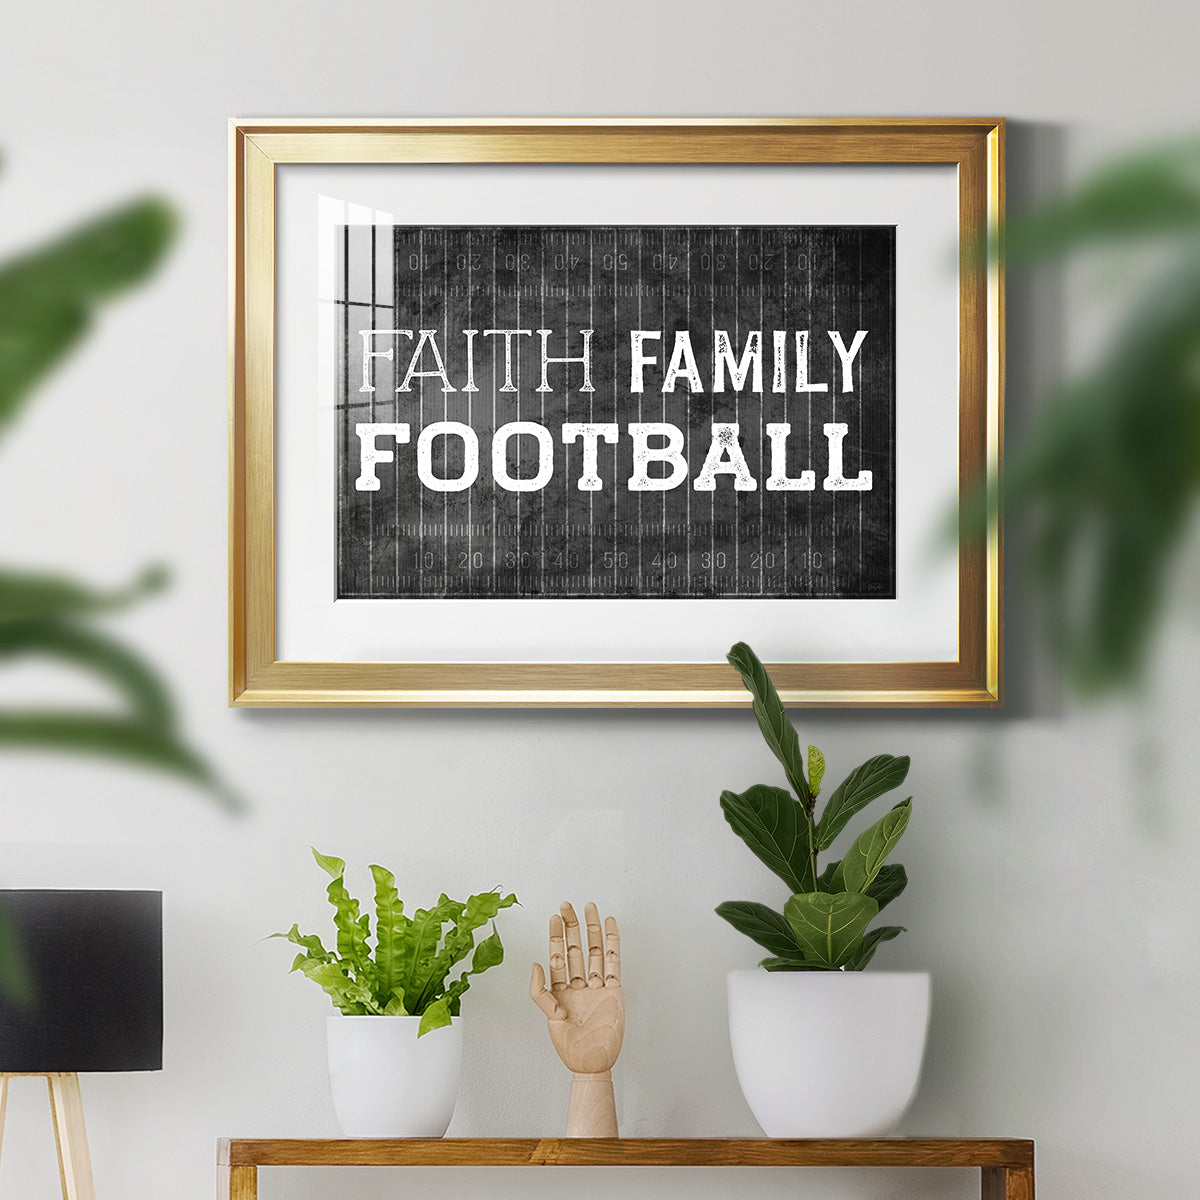 Faith Family Football Premium Framed Print - Ready to Hang